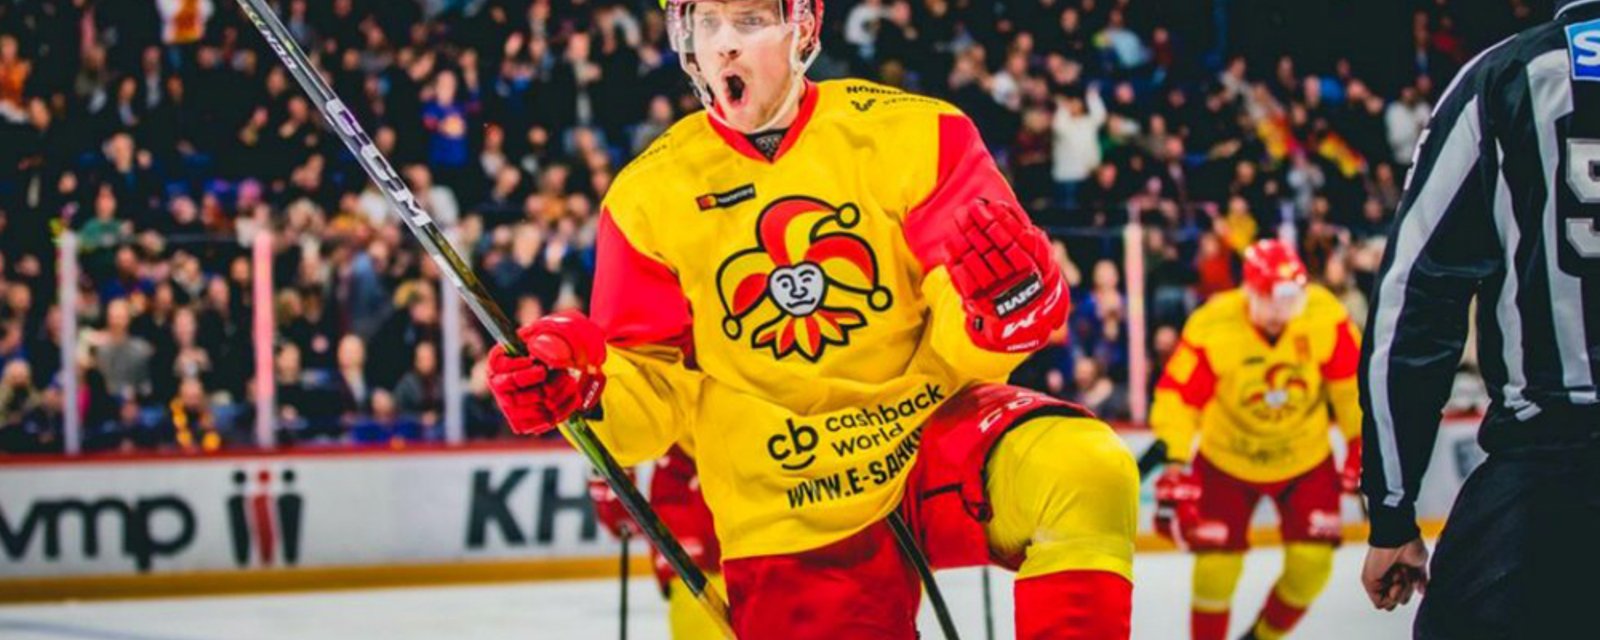 Leafs signing Lehtonen named KHL’s top defenseman